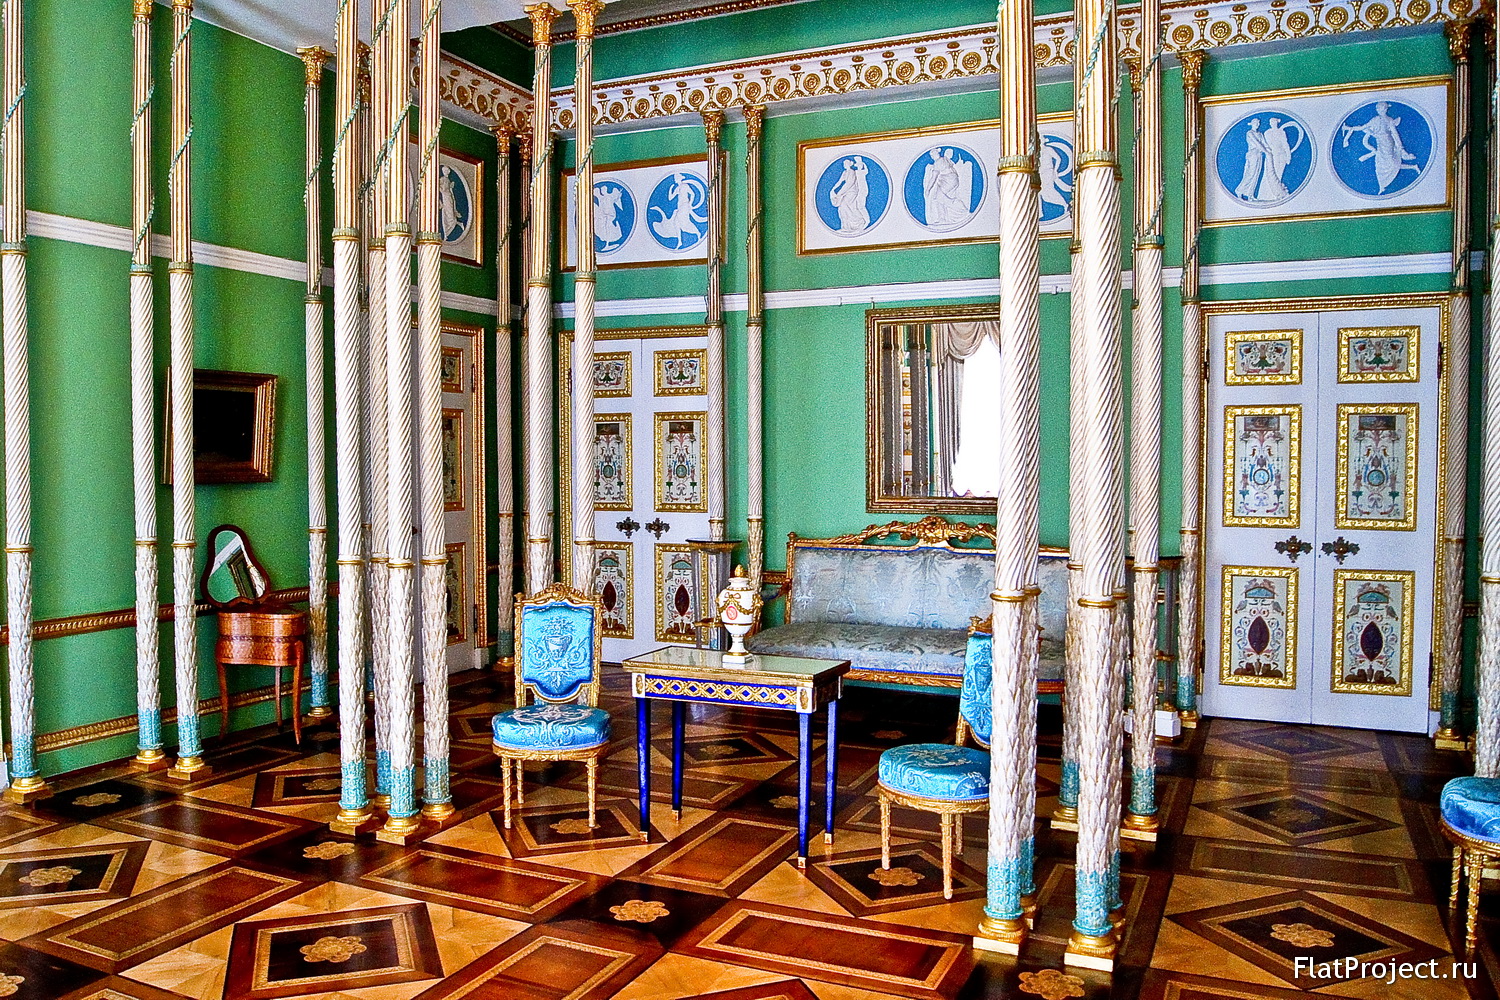 The Catherine Palace interiors – photo 38